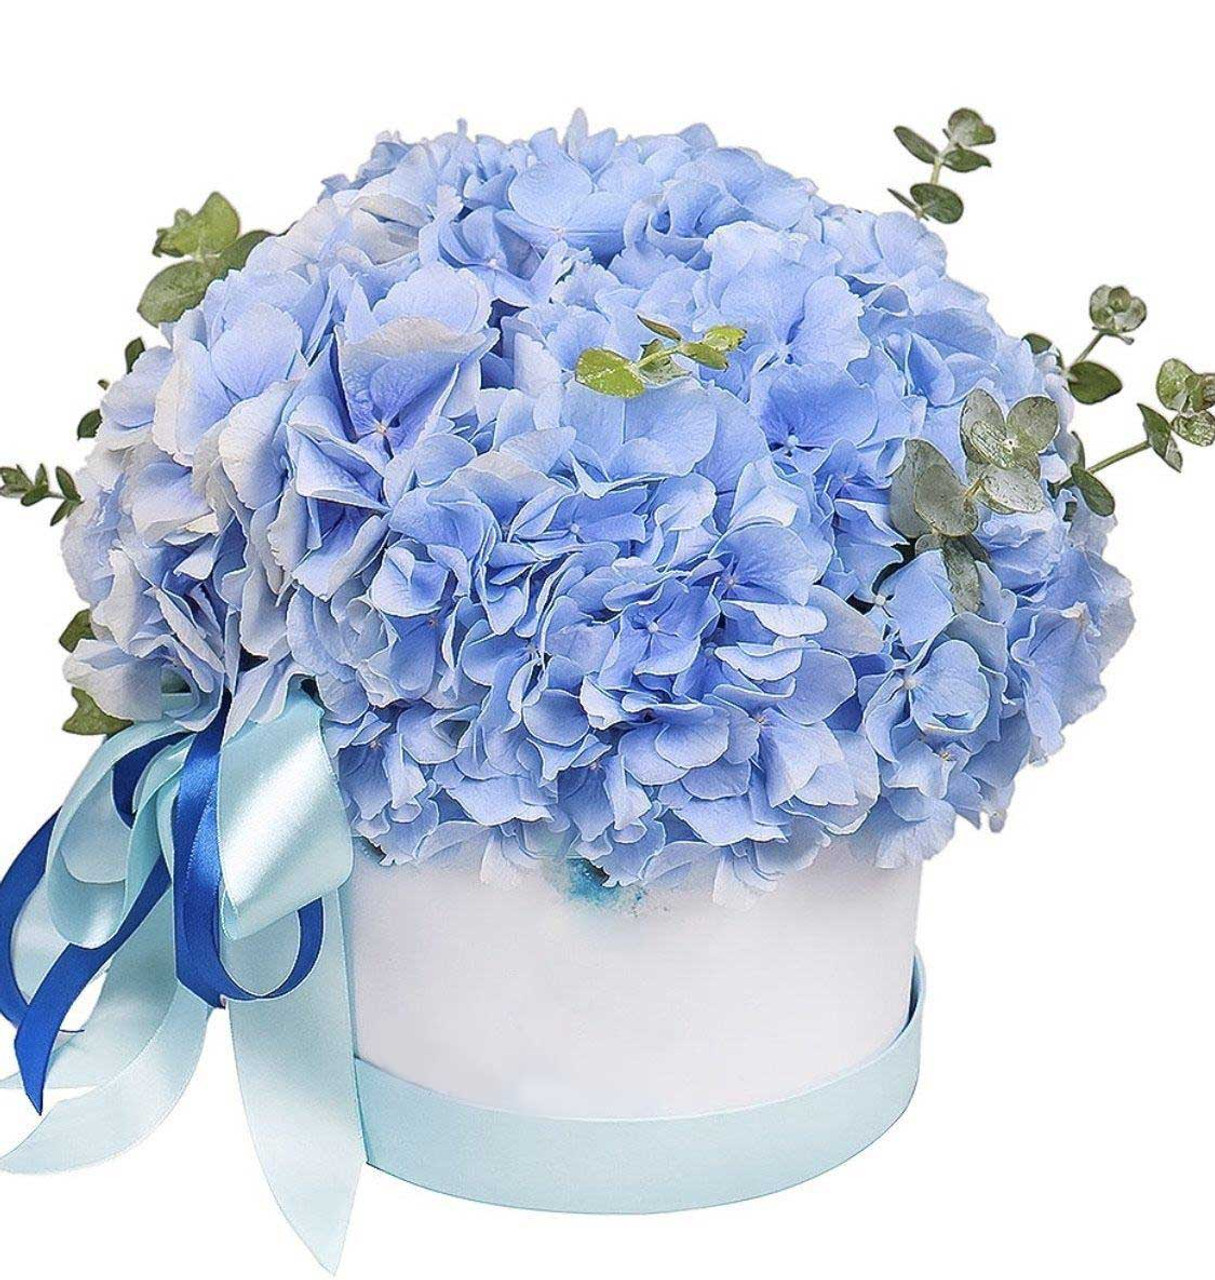 Boxed Blue Hydrangeas